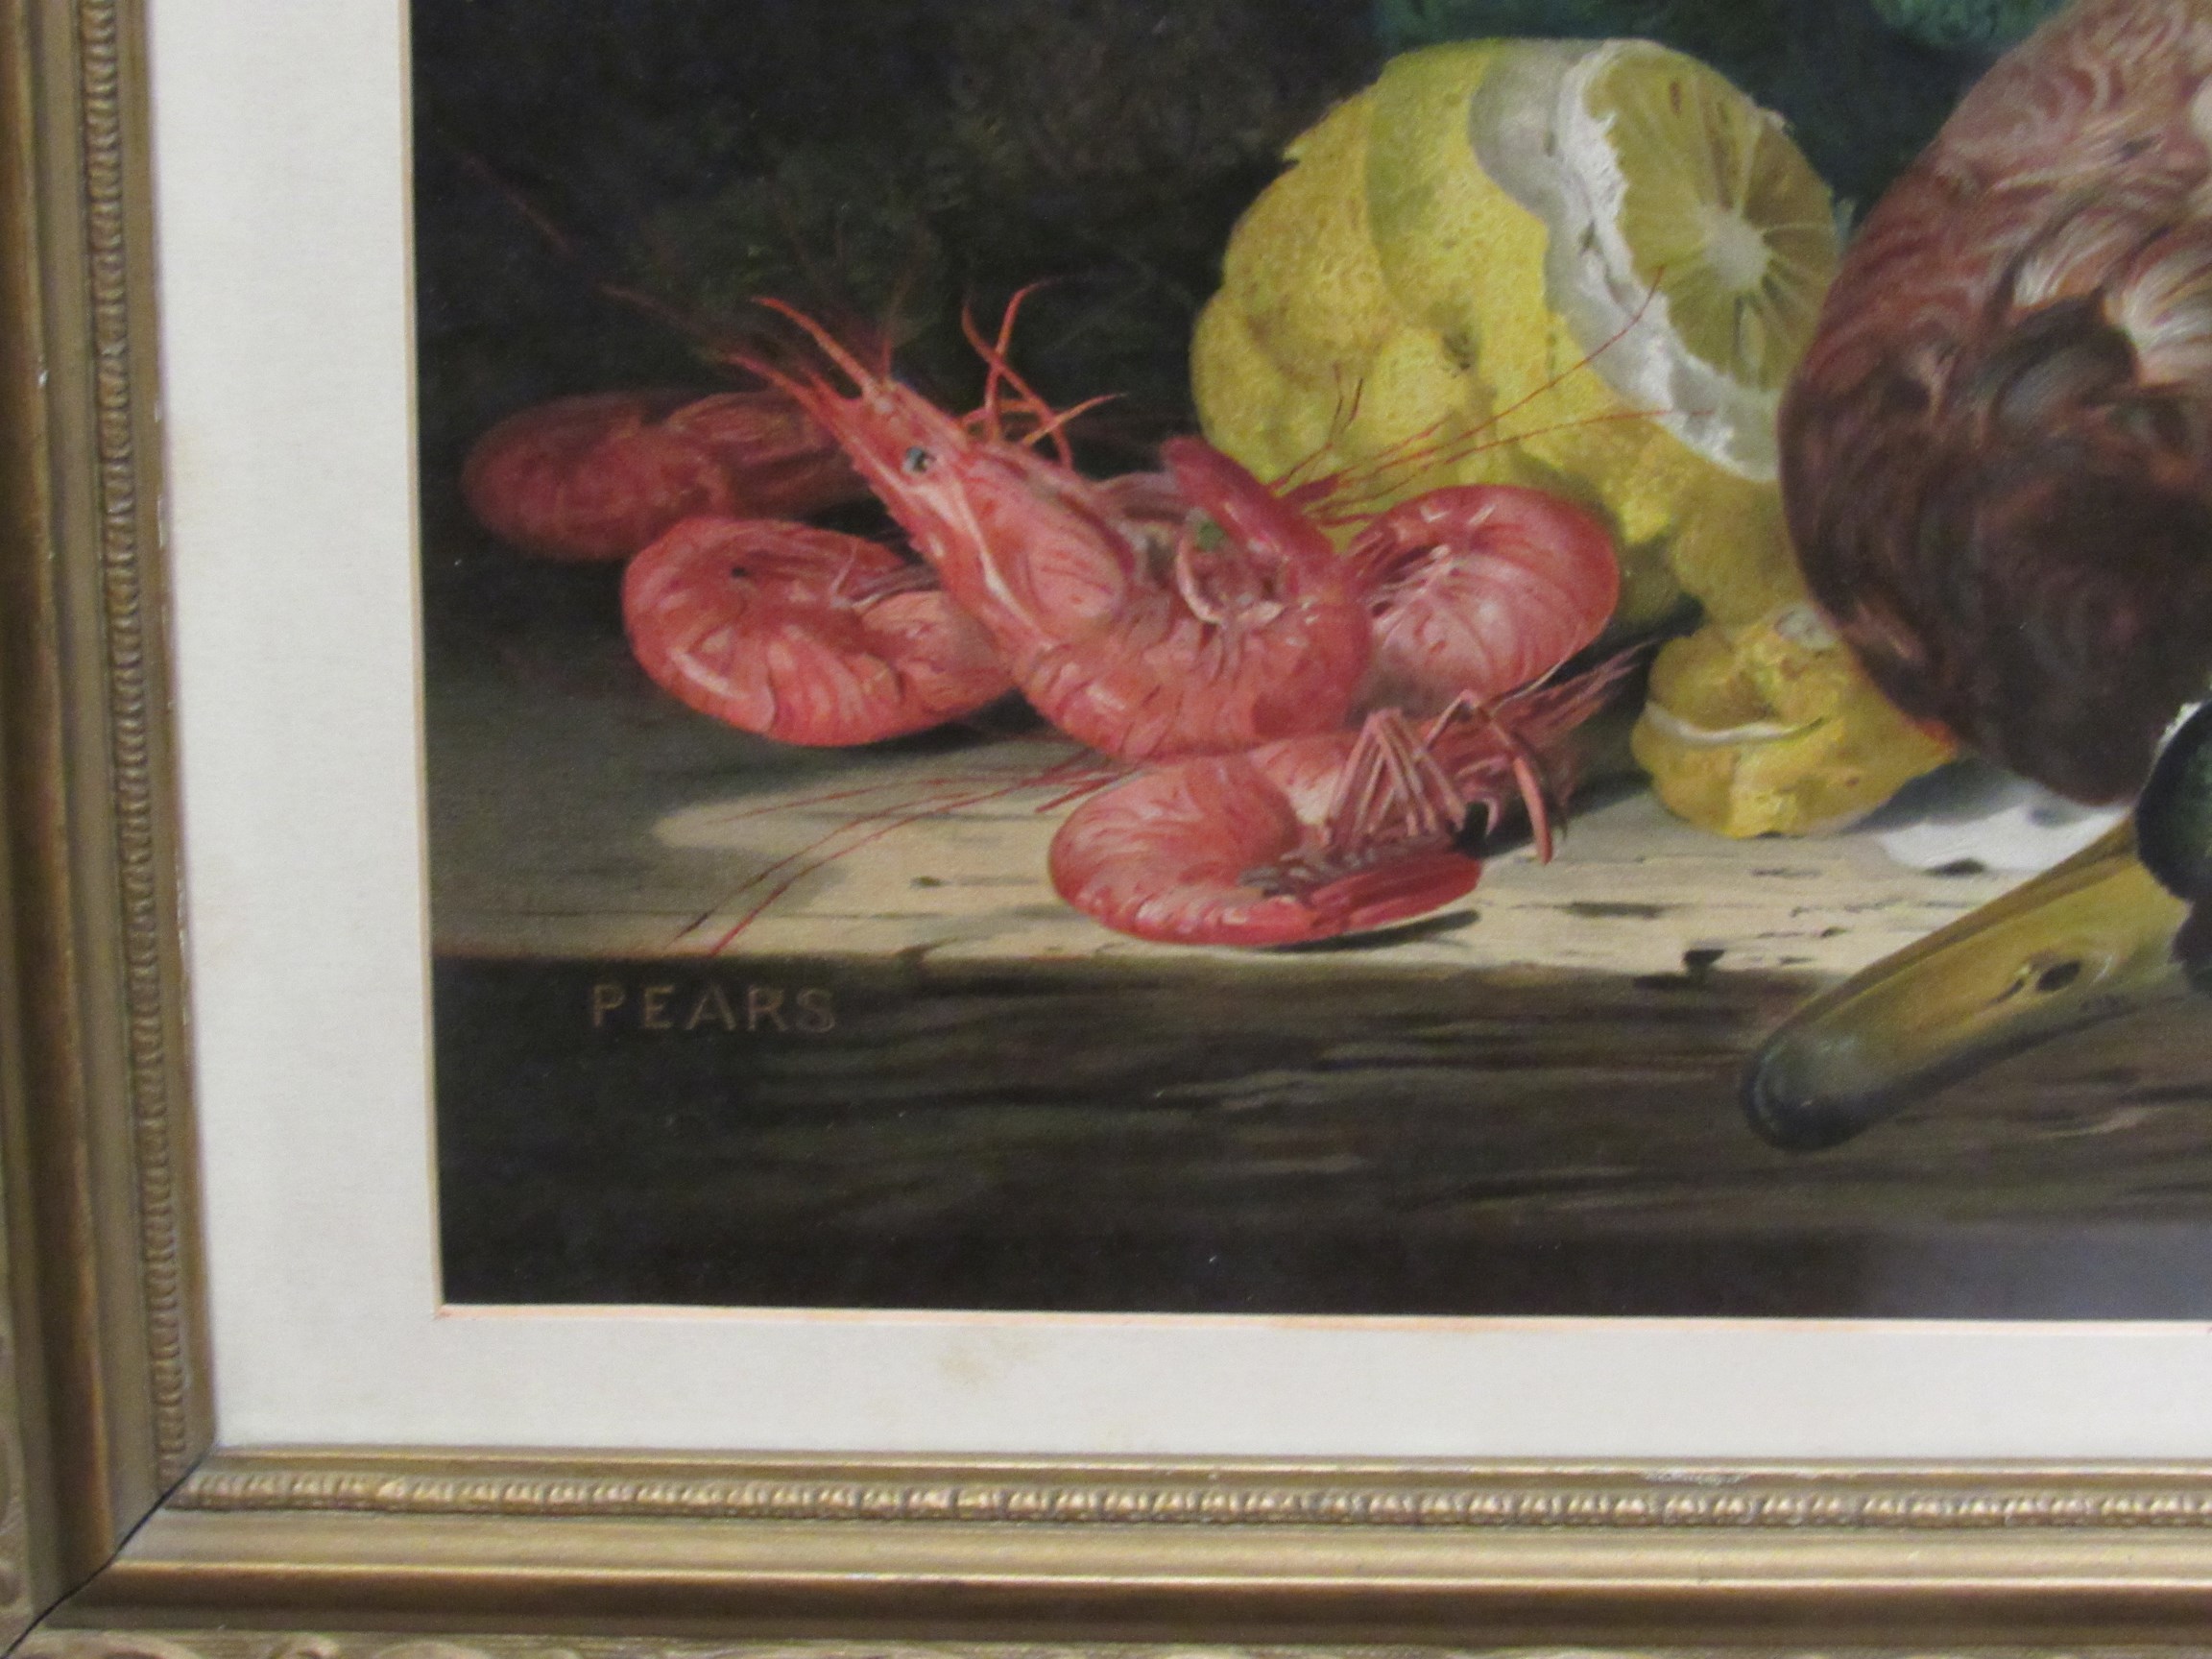 Pears coloured print still life, cabbage, lemon, shrimps and duck in ornate gilt frame, - Image 2 of 2